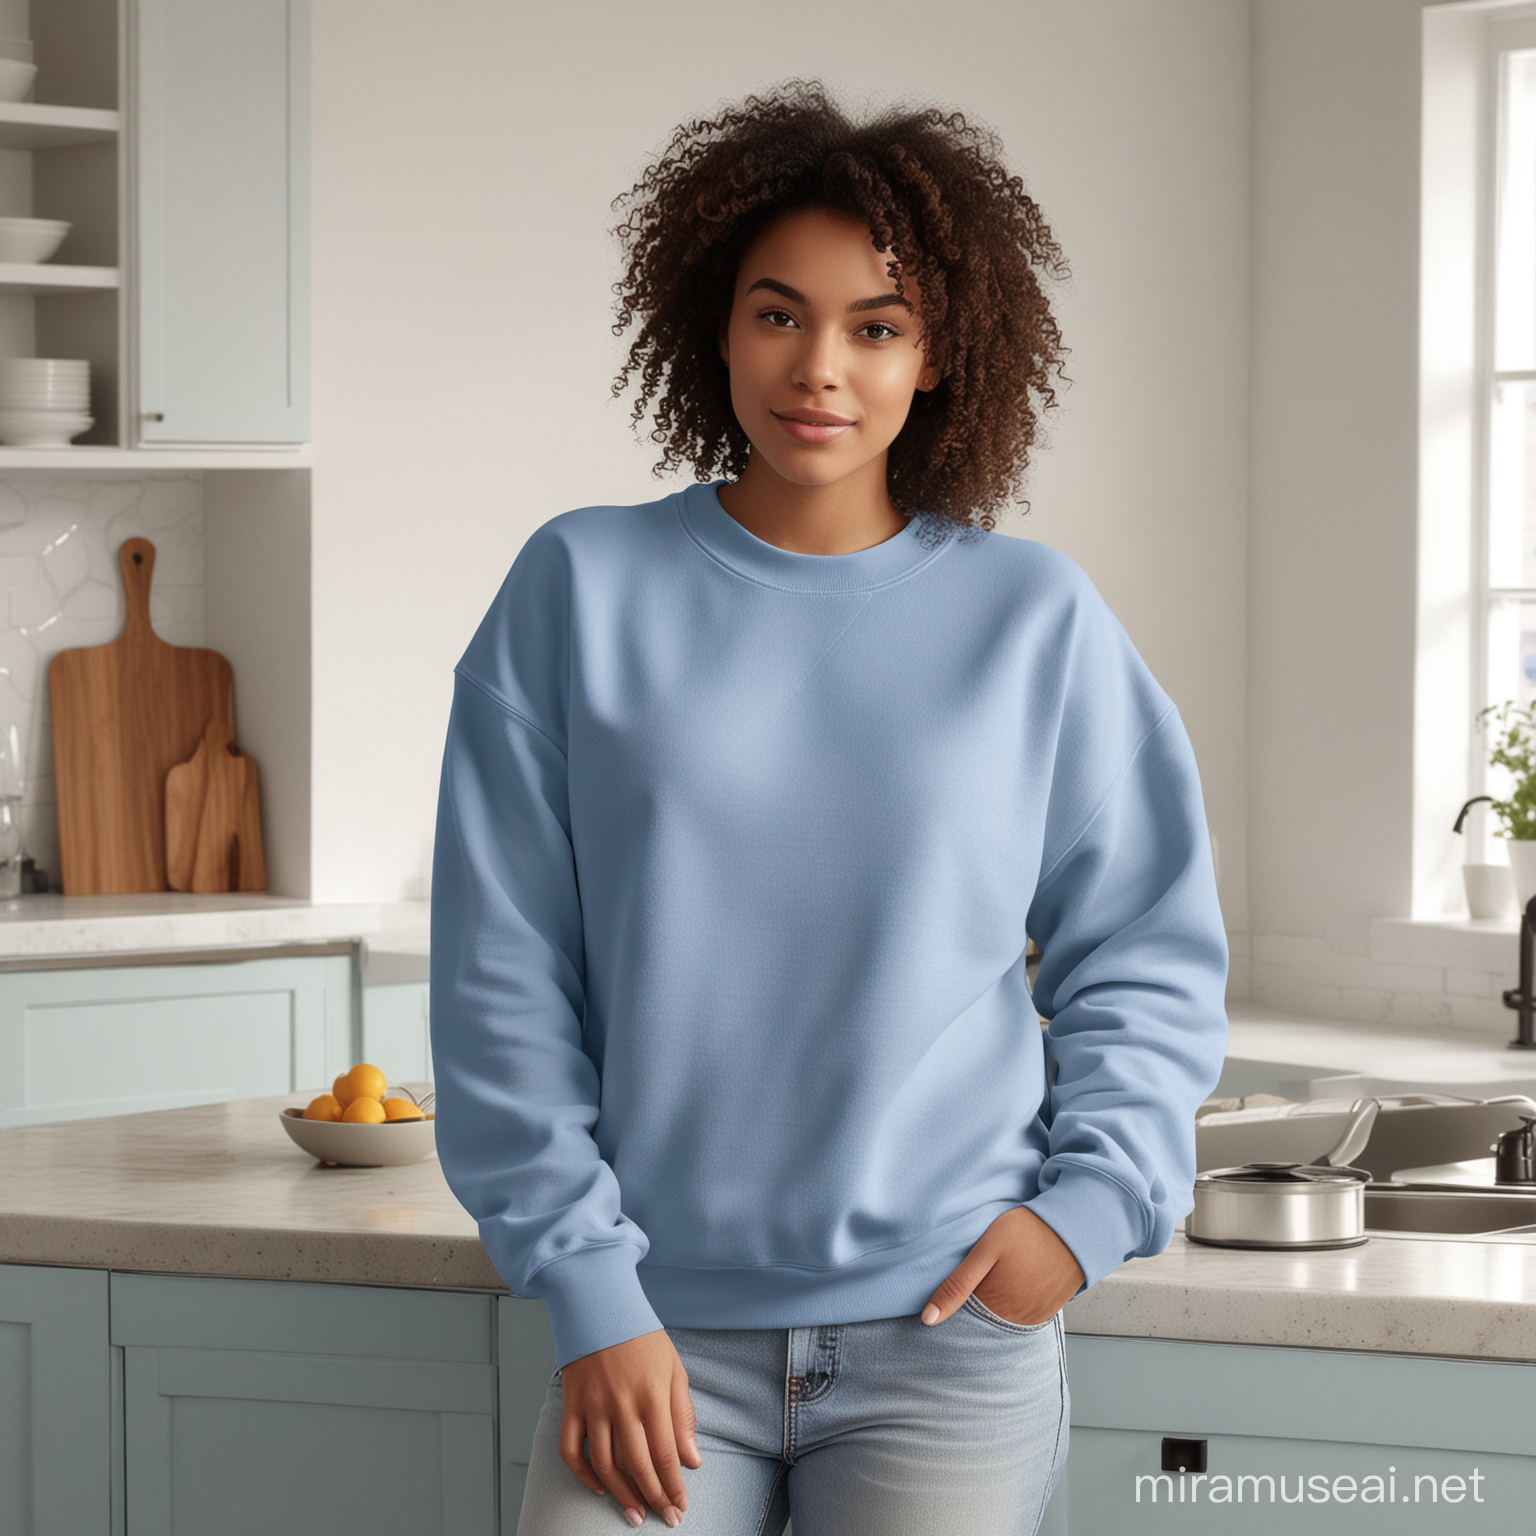 Modern Kitchen Fashion Stylish Model in Gildan 1800 Oversized Indiglo Blue Sweatshirt